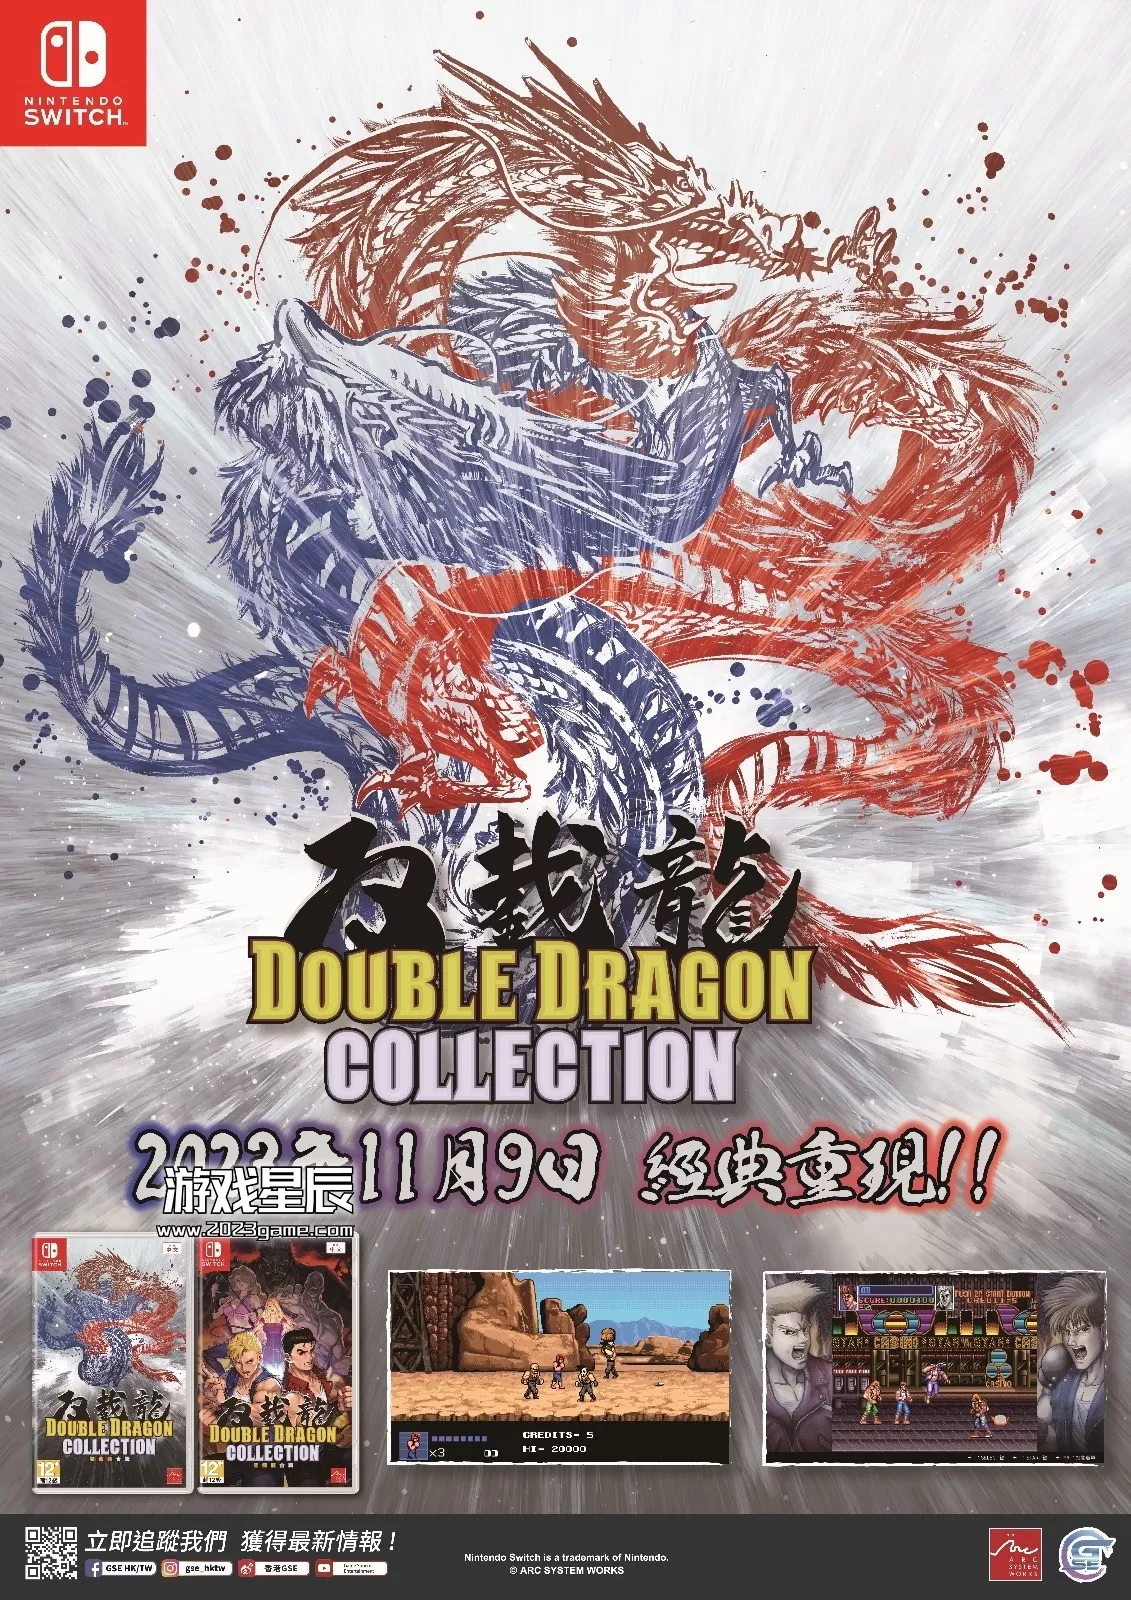 【6部作品】switch《双截龙合集 Double Dragon Collection》中文版XCI下载_0